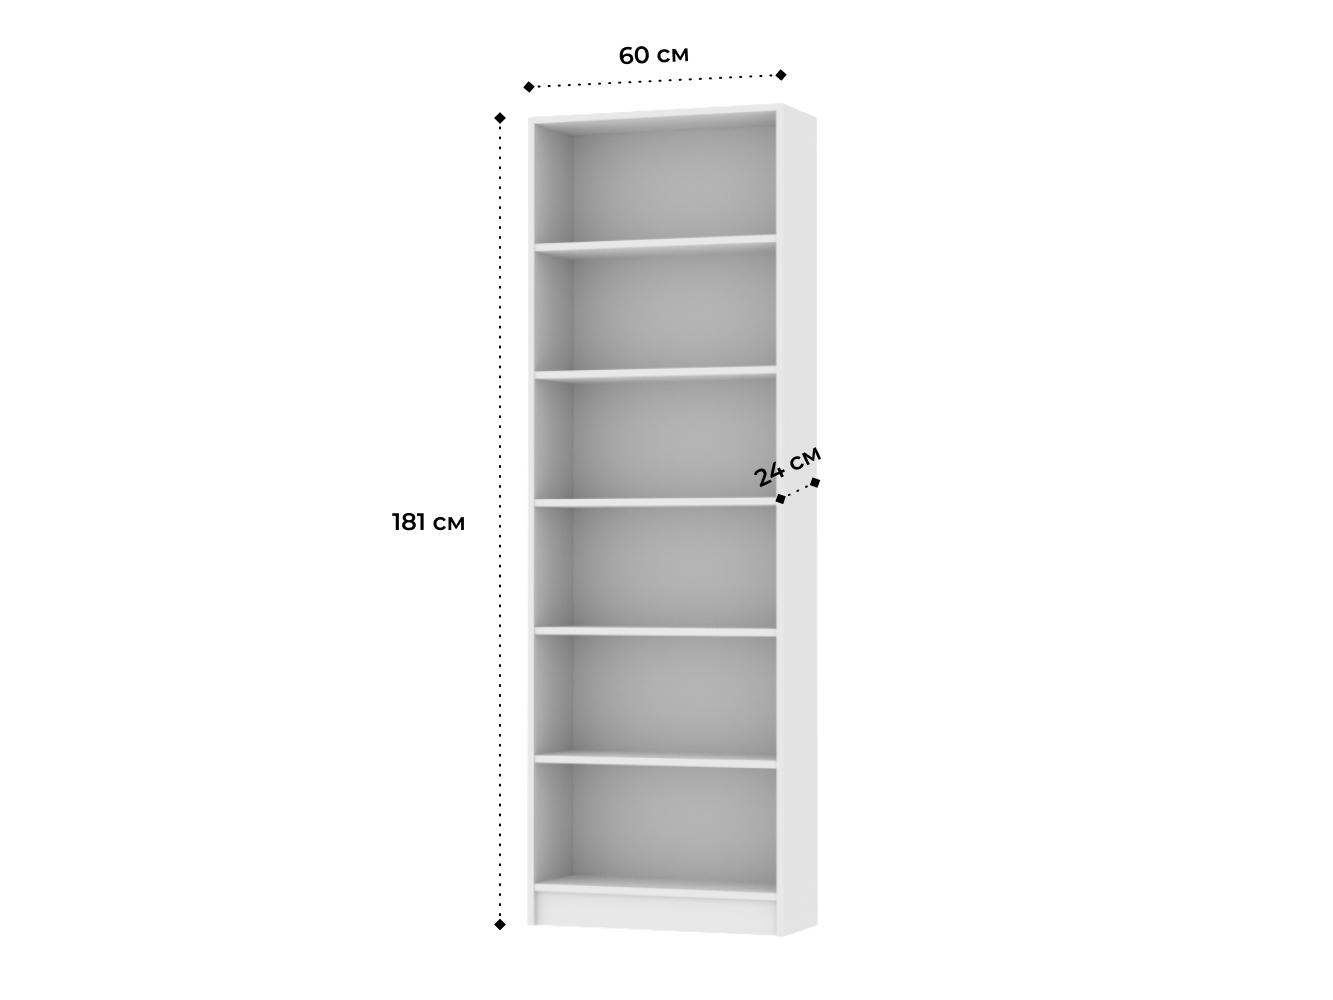 Изображение товара Стеллаж Билли 124 white ИКЕА (IKEA), 60x24x181 см на сайте adeta.ru